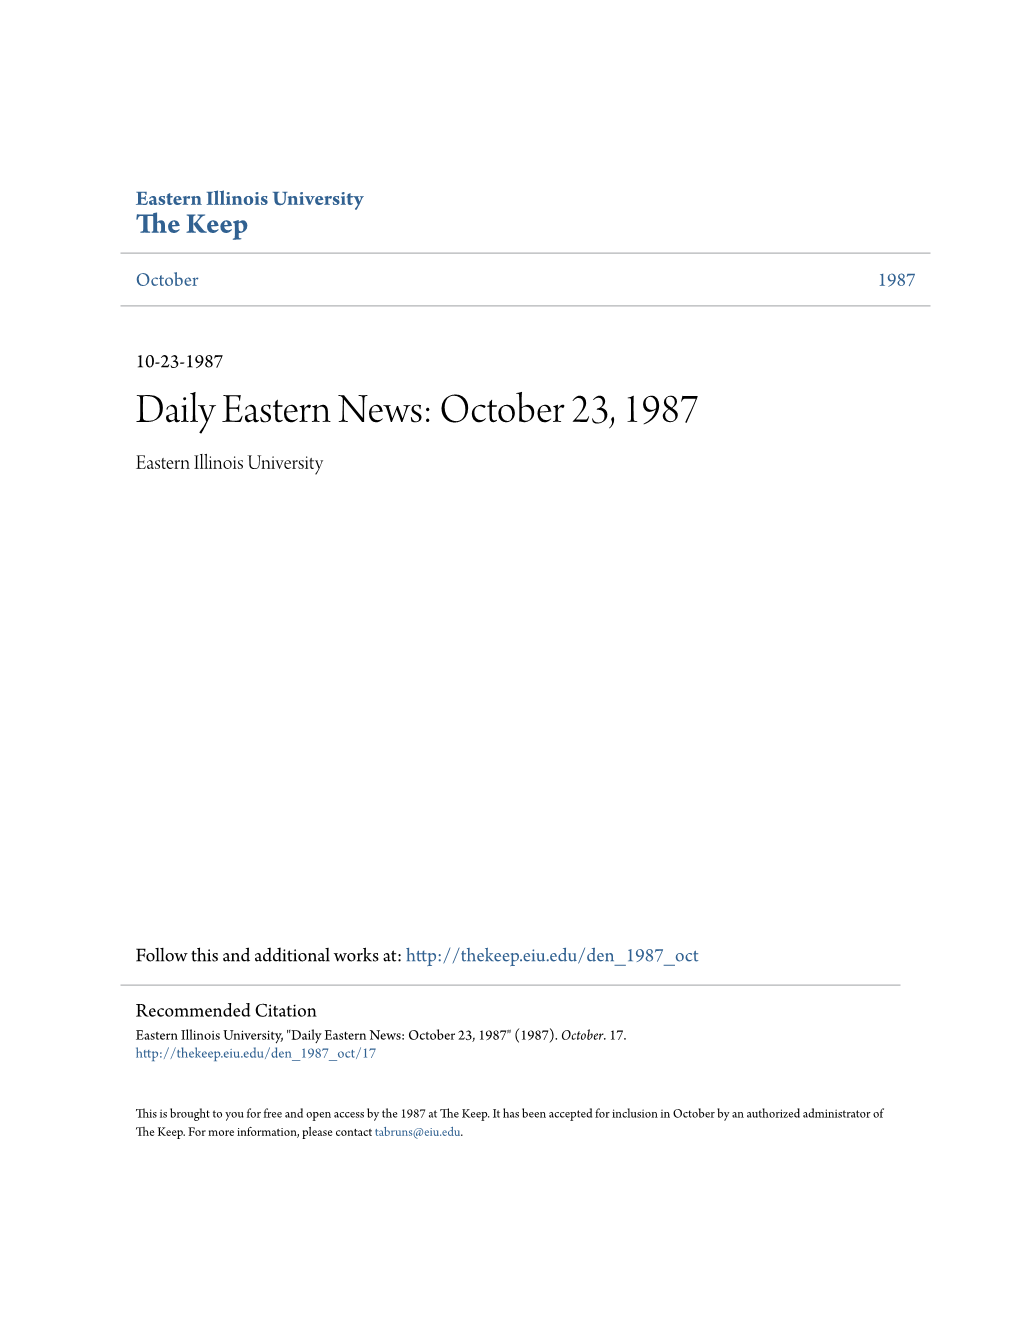 Daily Eastern News: October 23, 1987 Eastern Illinois University